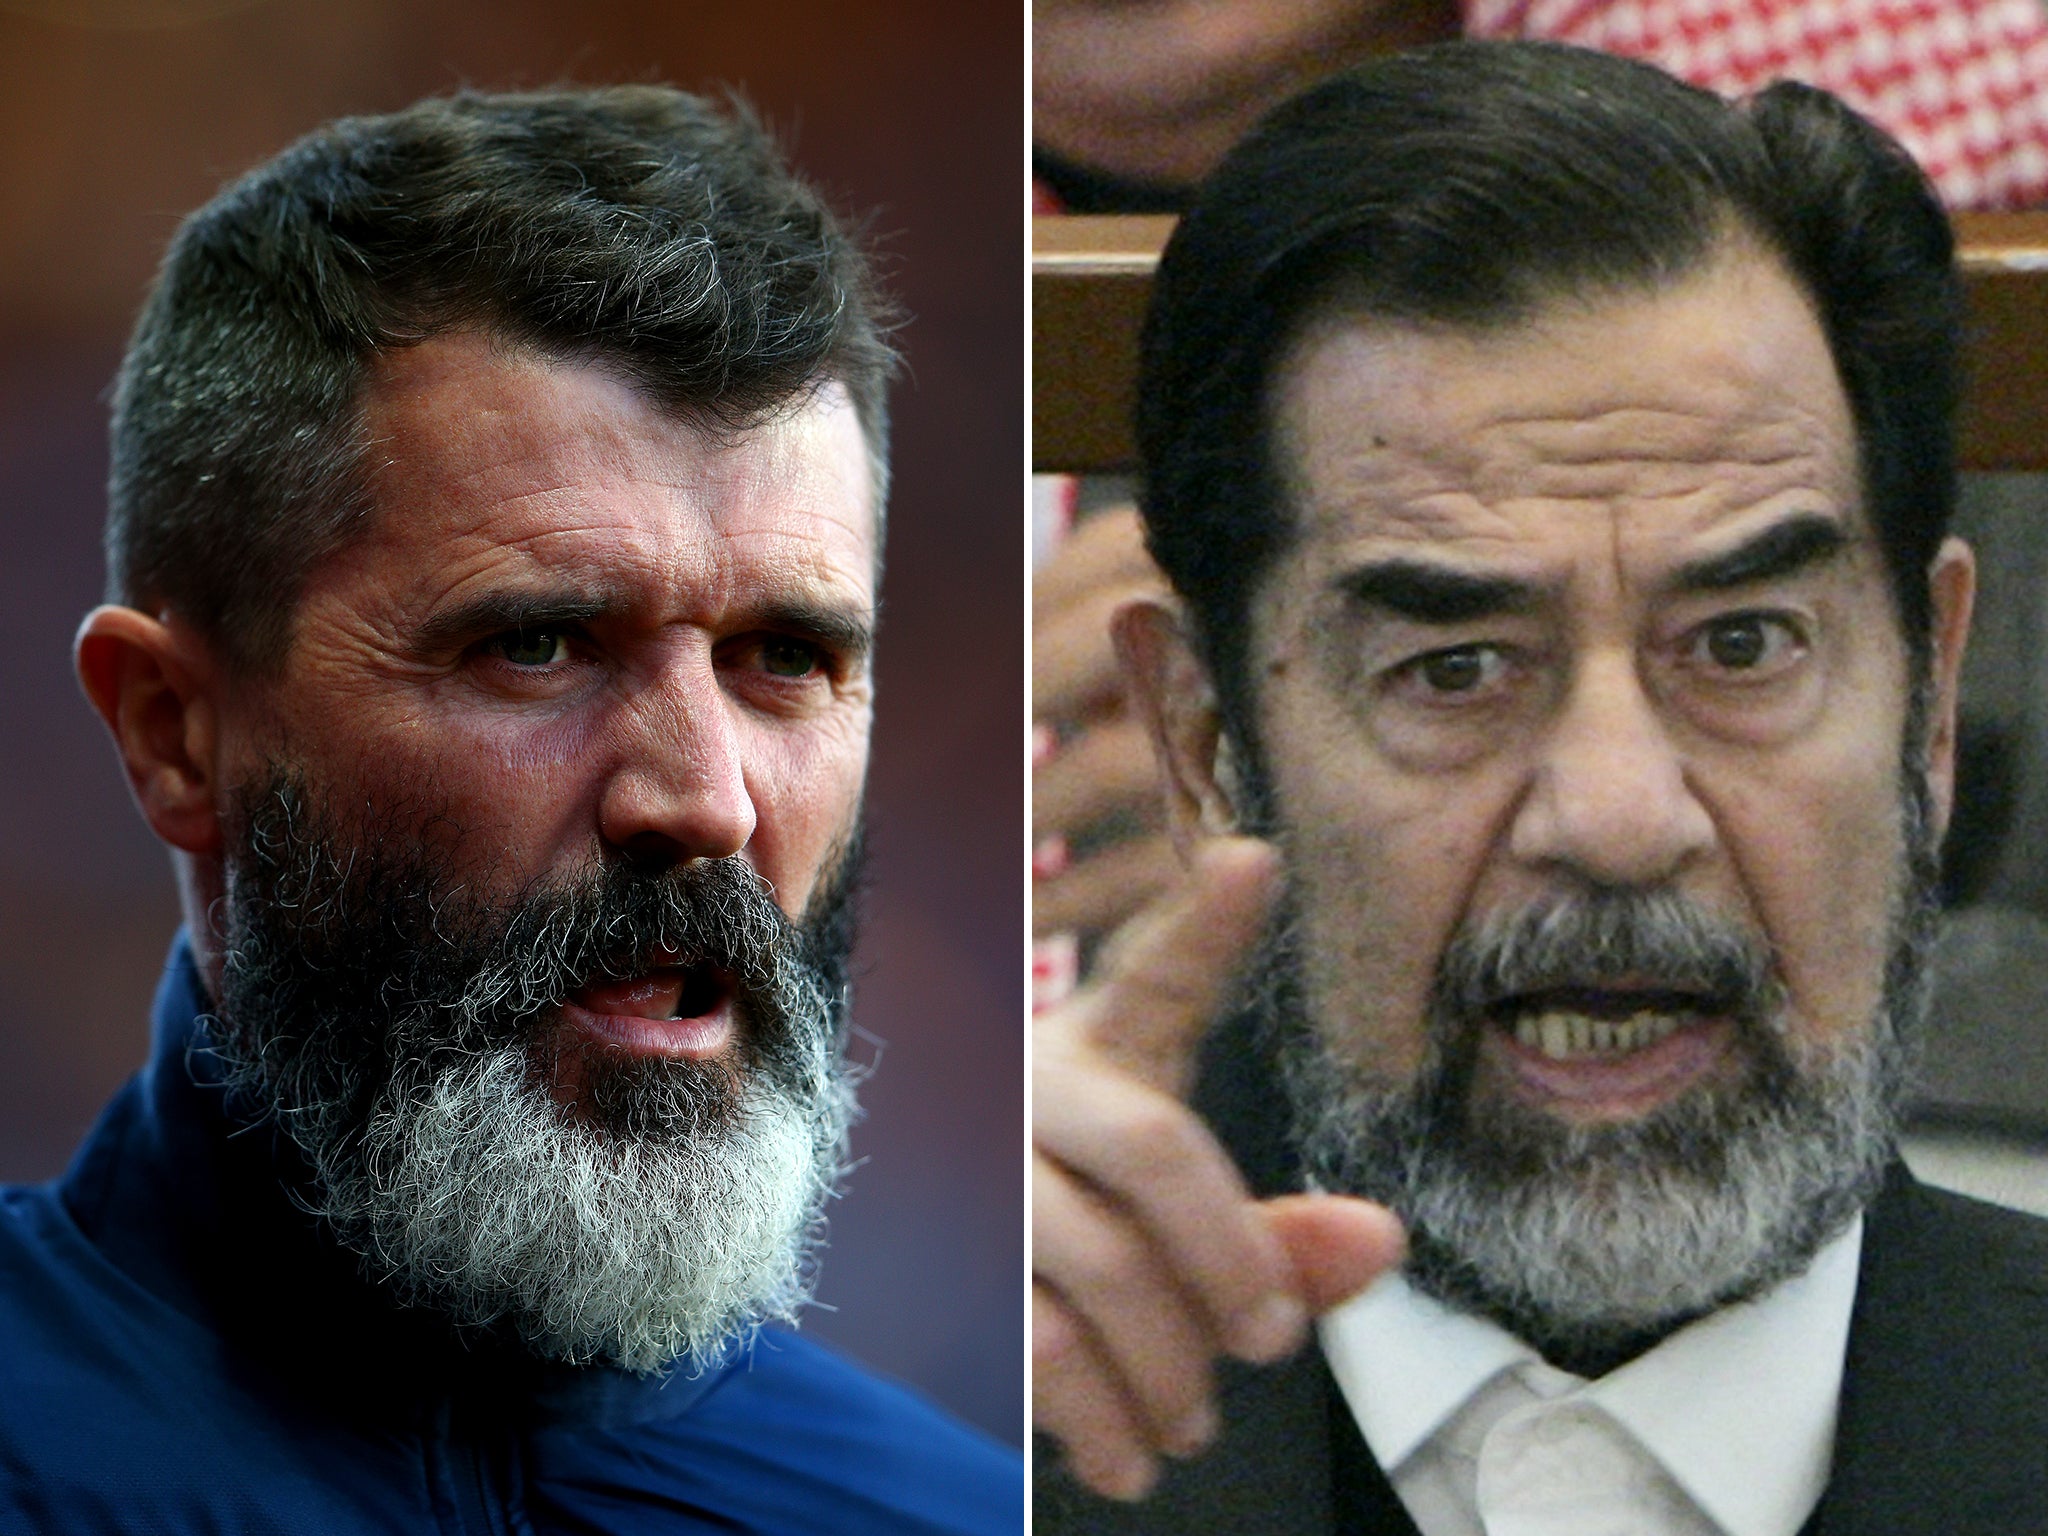 Roy Keane and Saddam Hussein